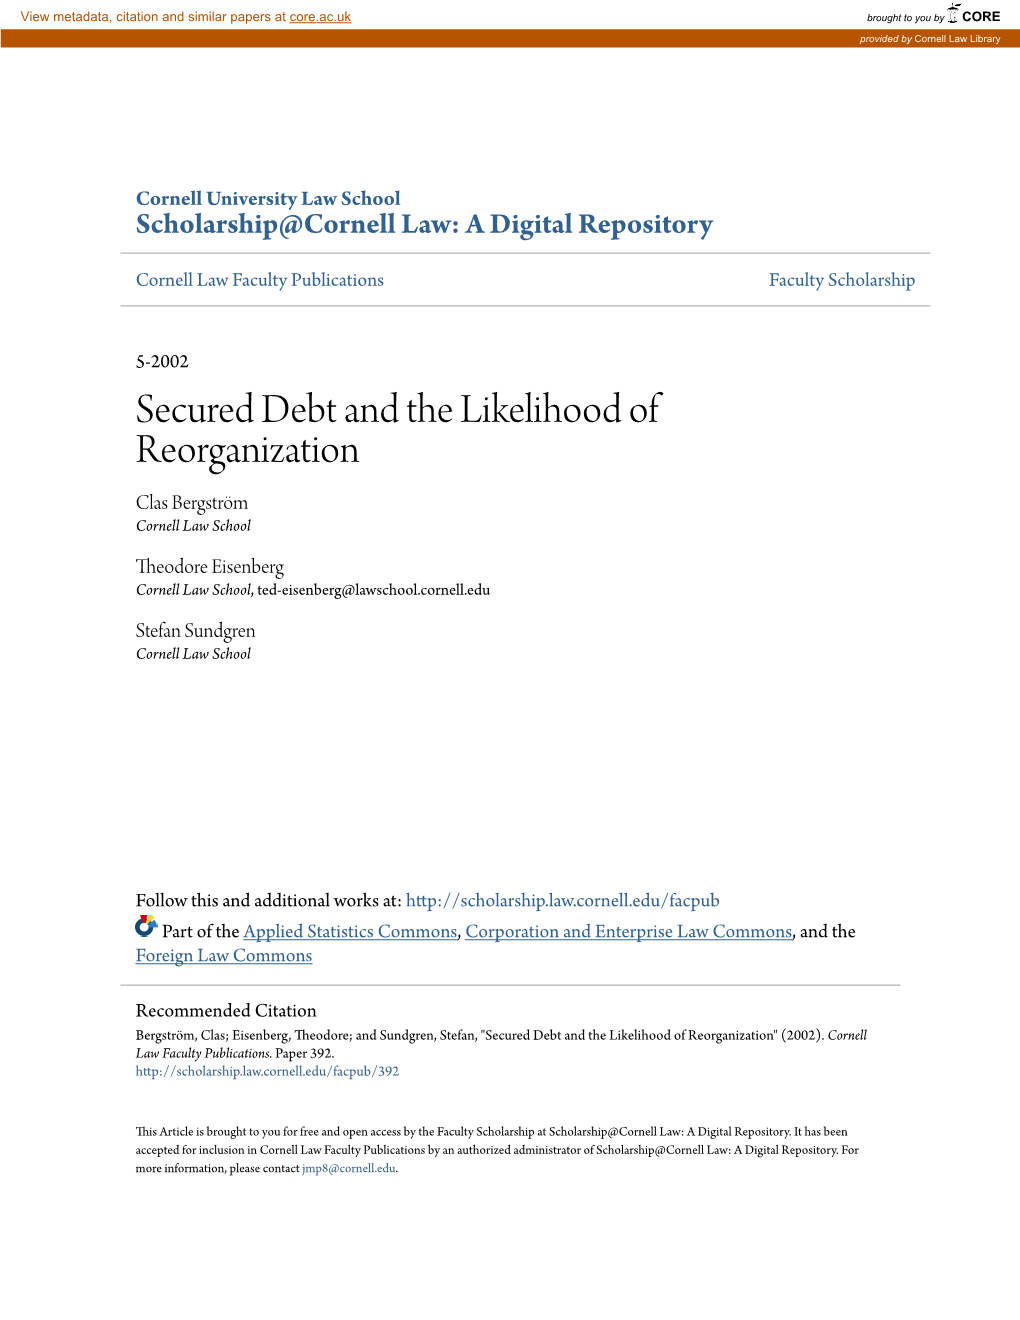 Secured Debt and the Likelihood of Reorganization Clas Bergström Cornell Law School